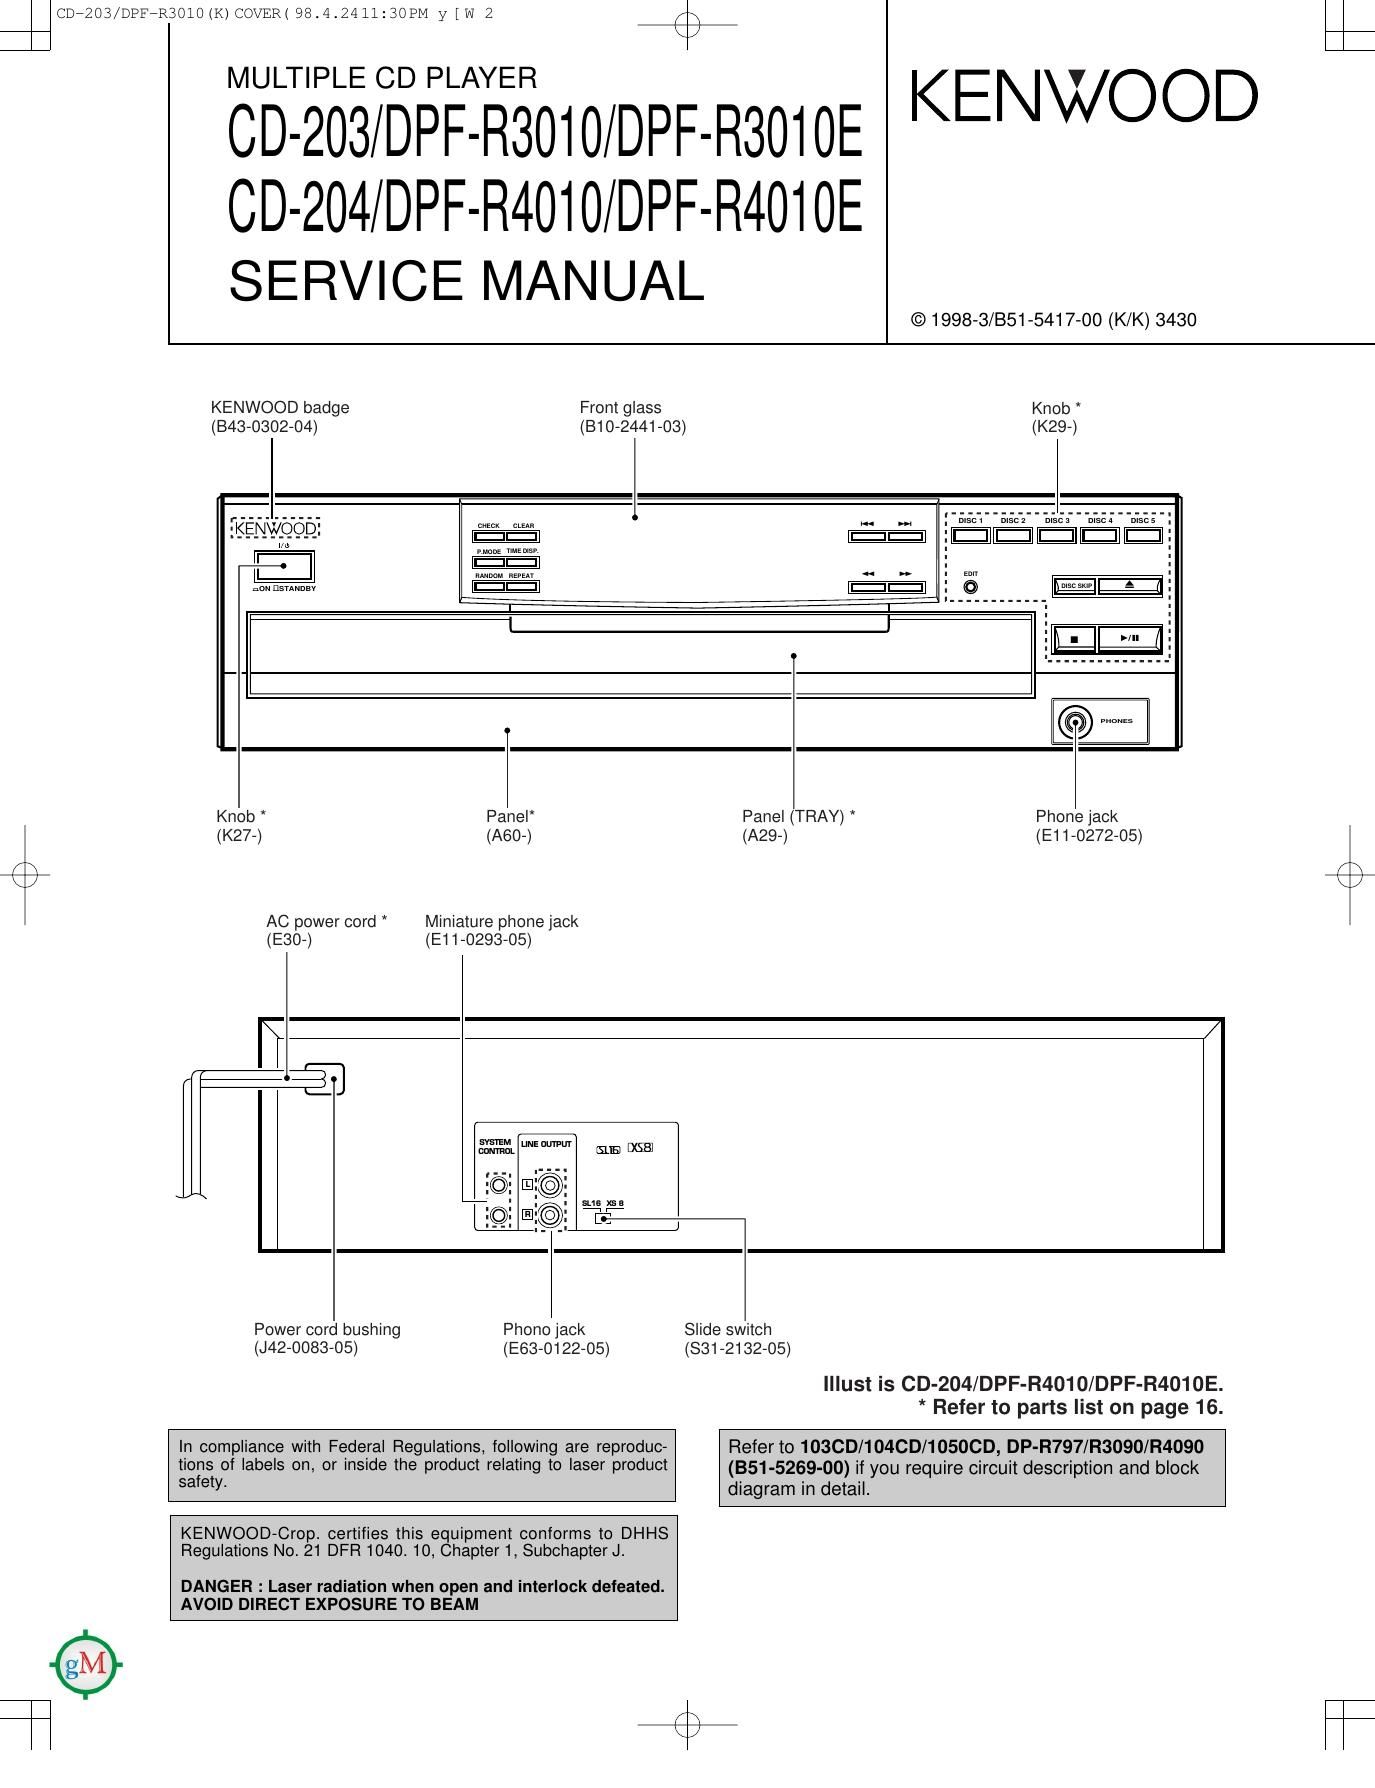 Kenwood DPFR 4010 E Service Manual